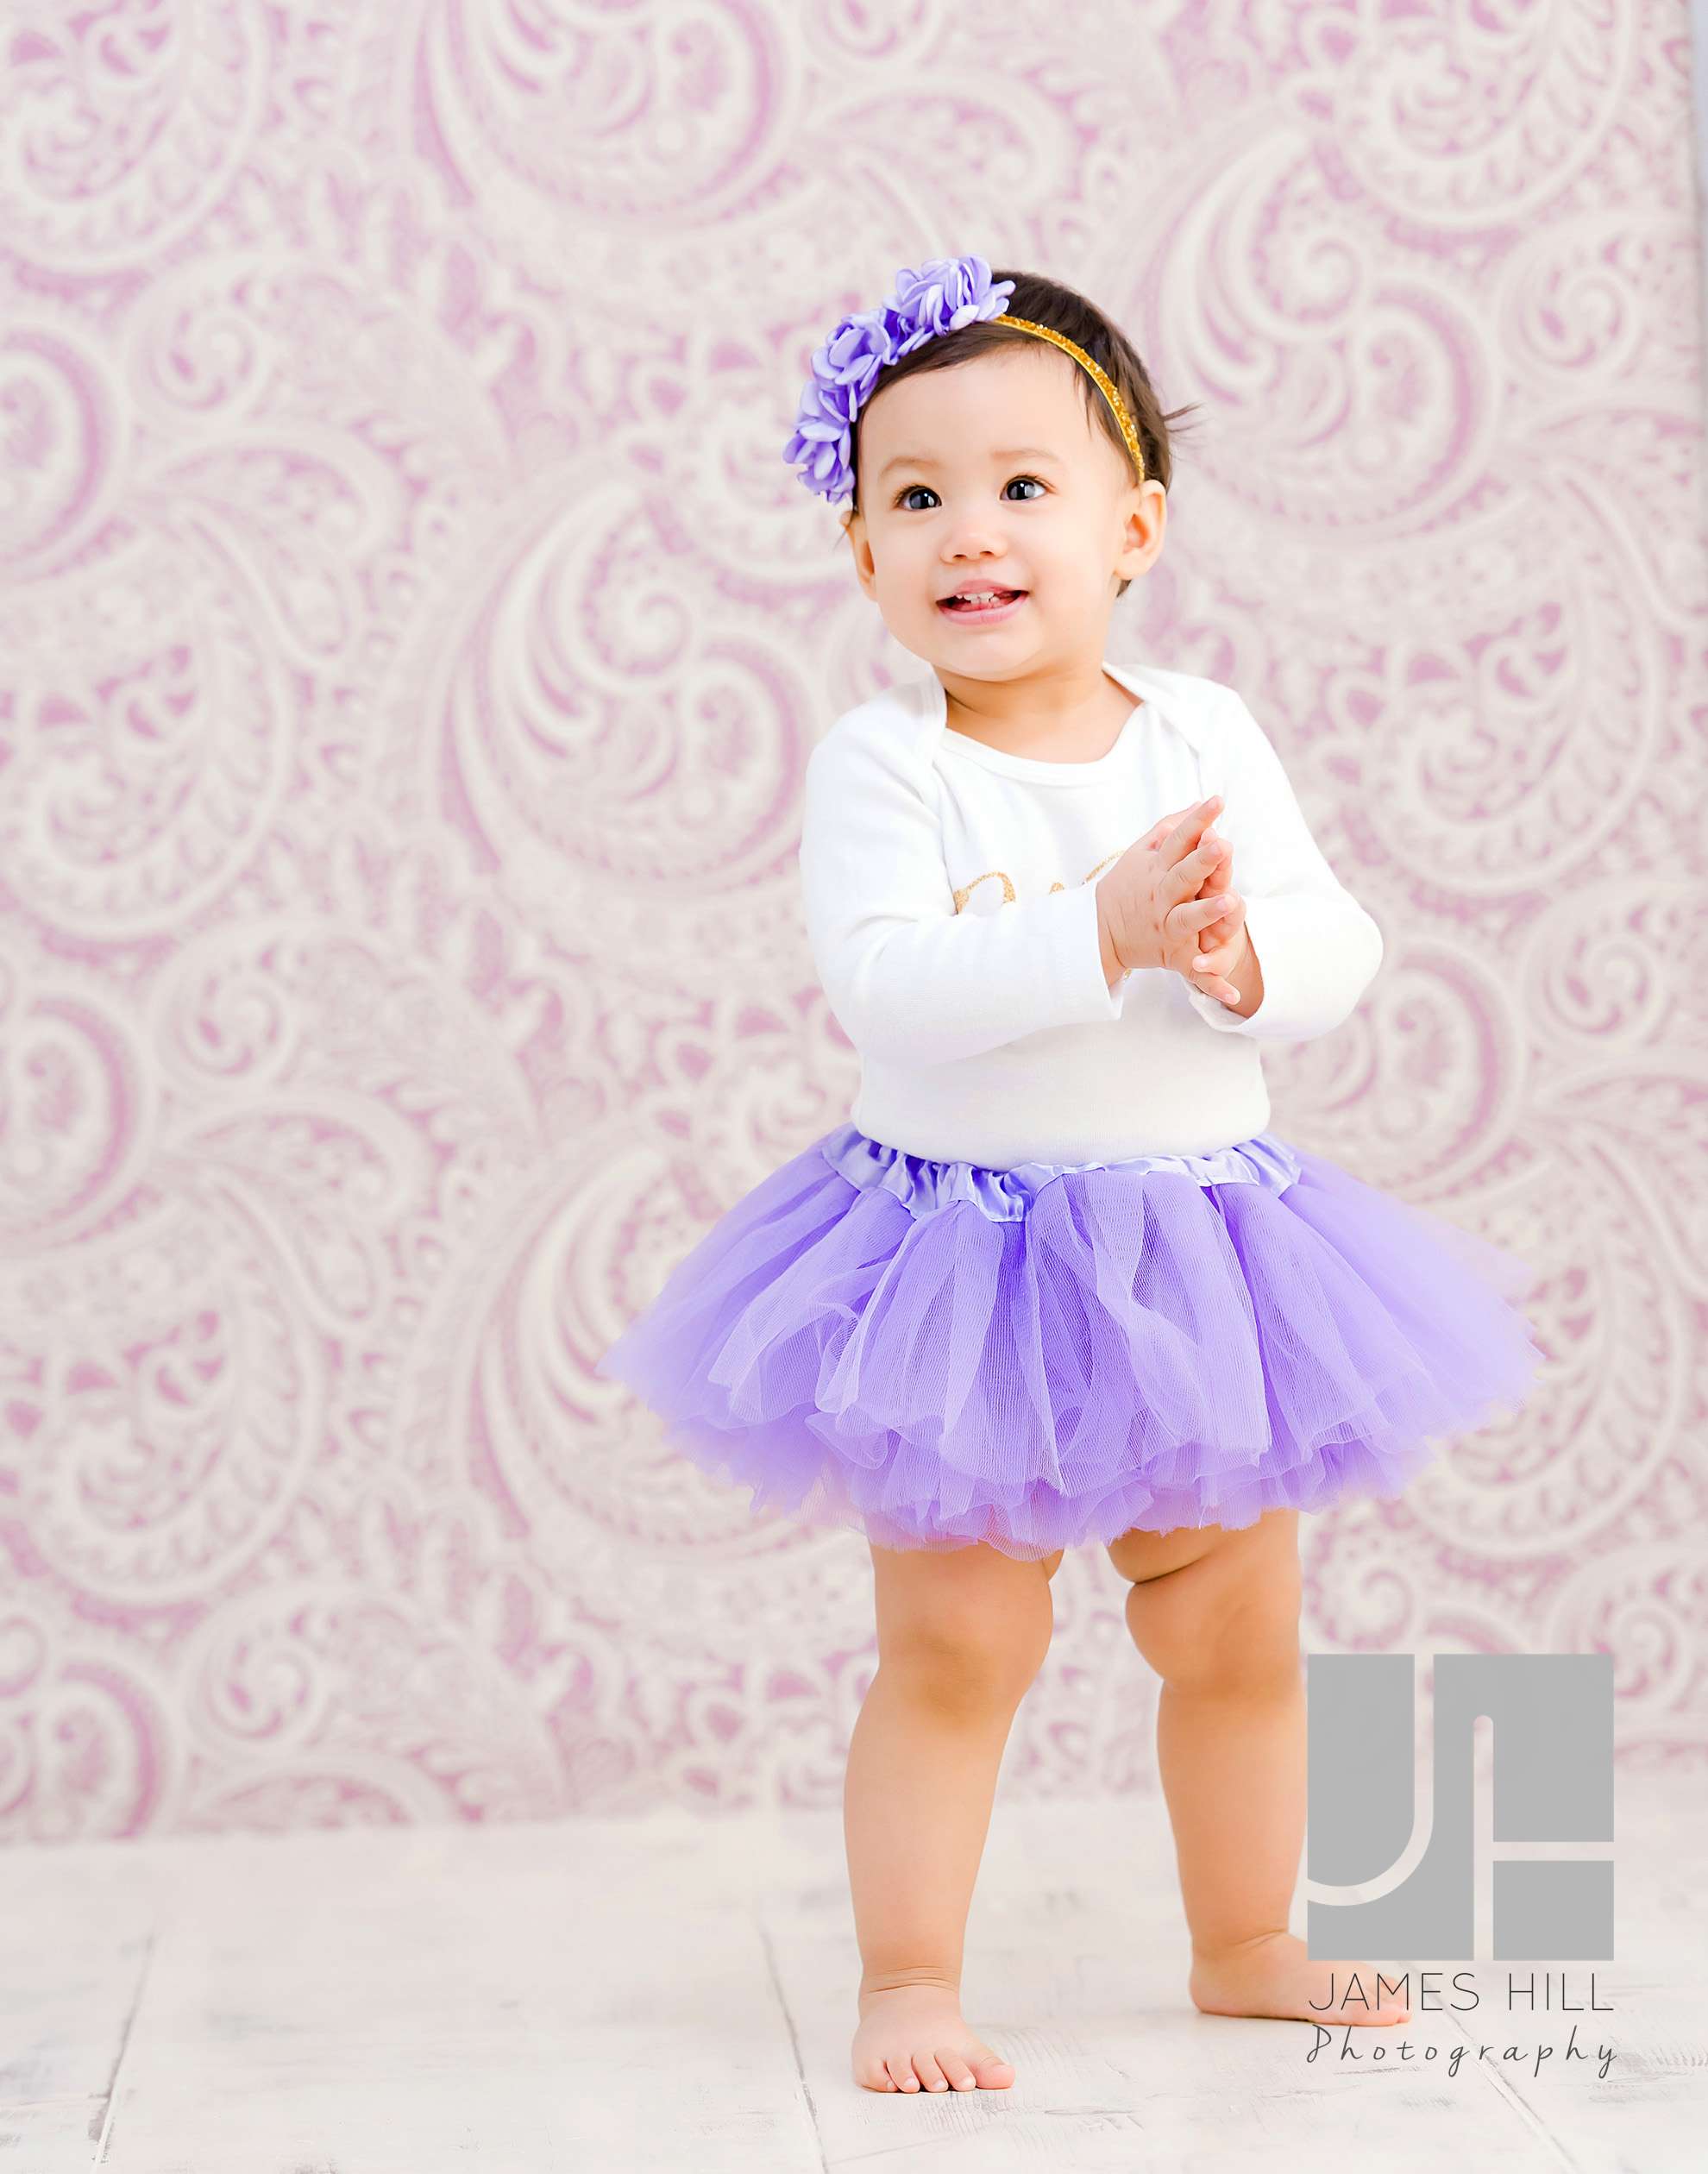 So sweet in her purple tutu!